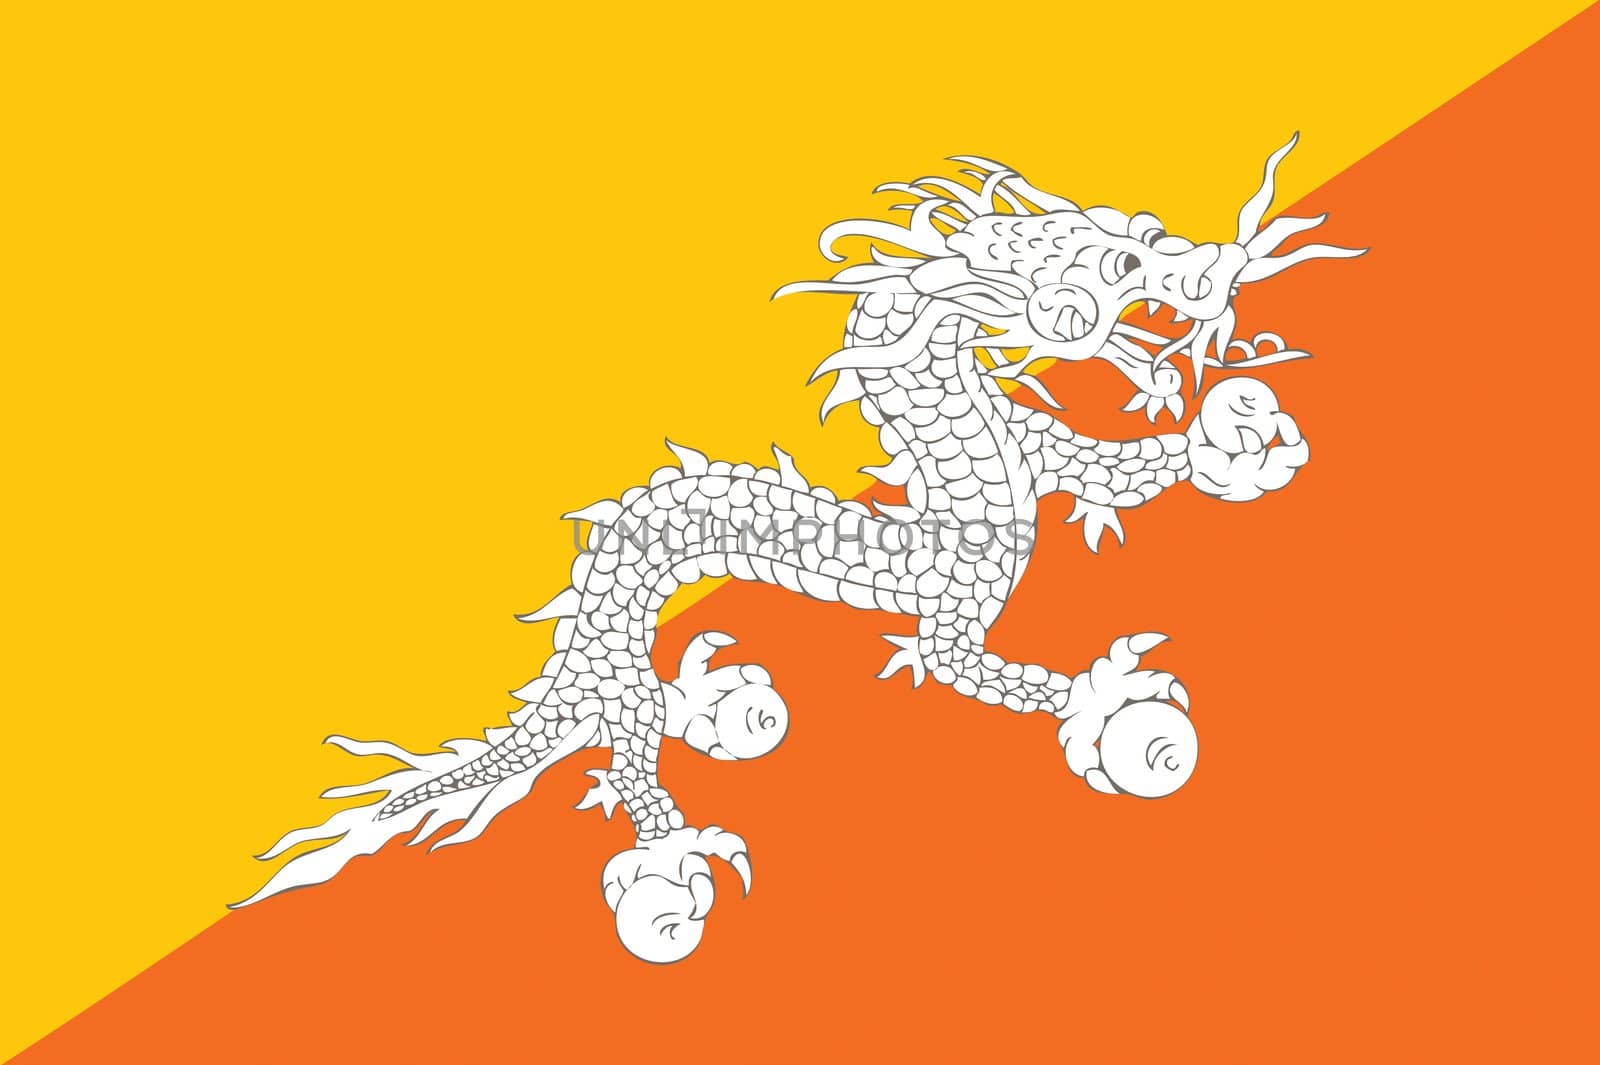 national flag of Bhutan by vospalej